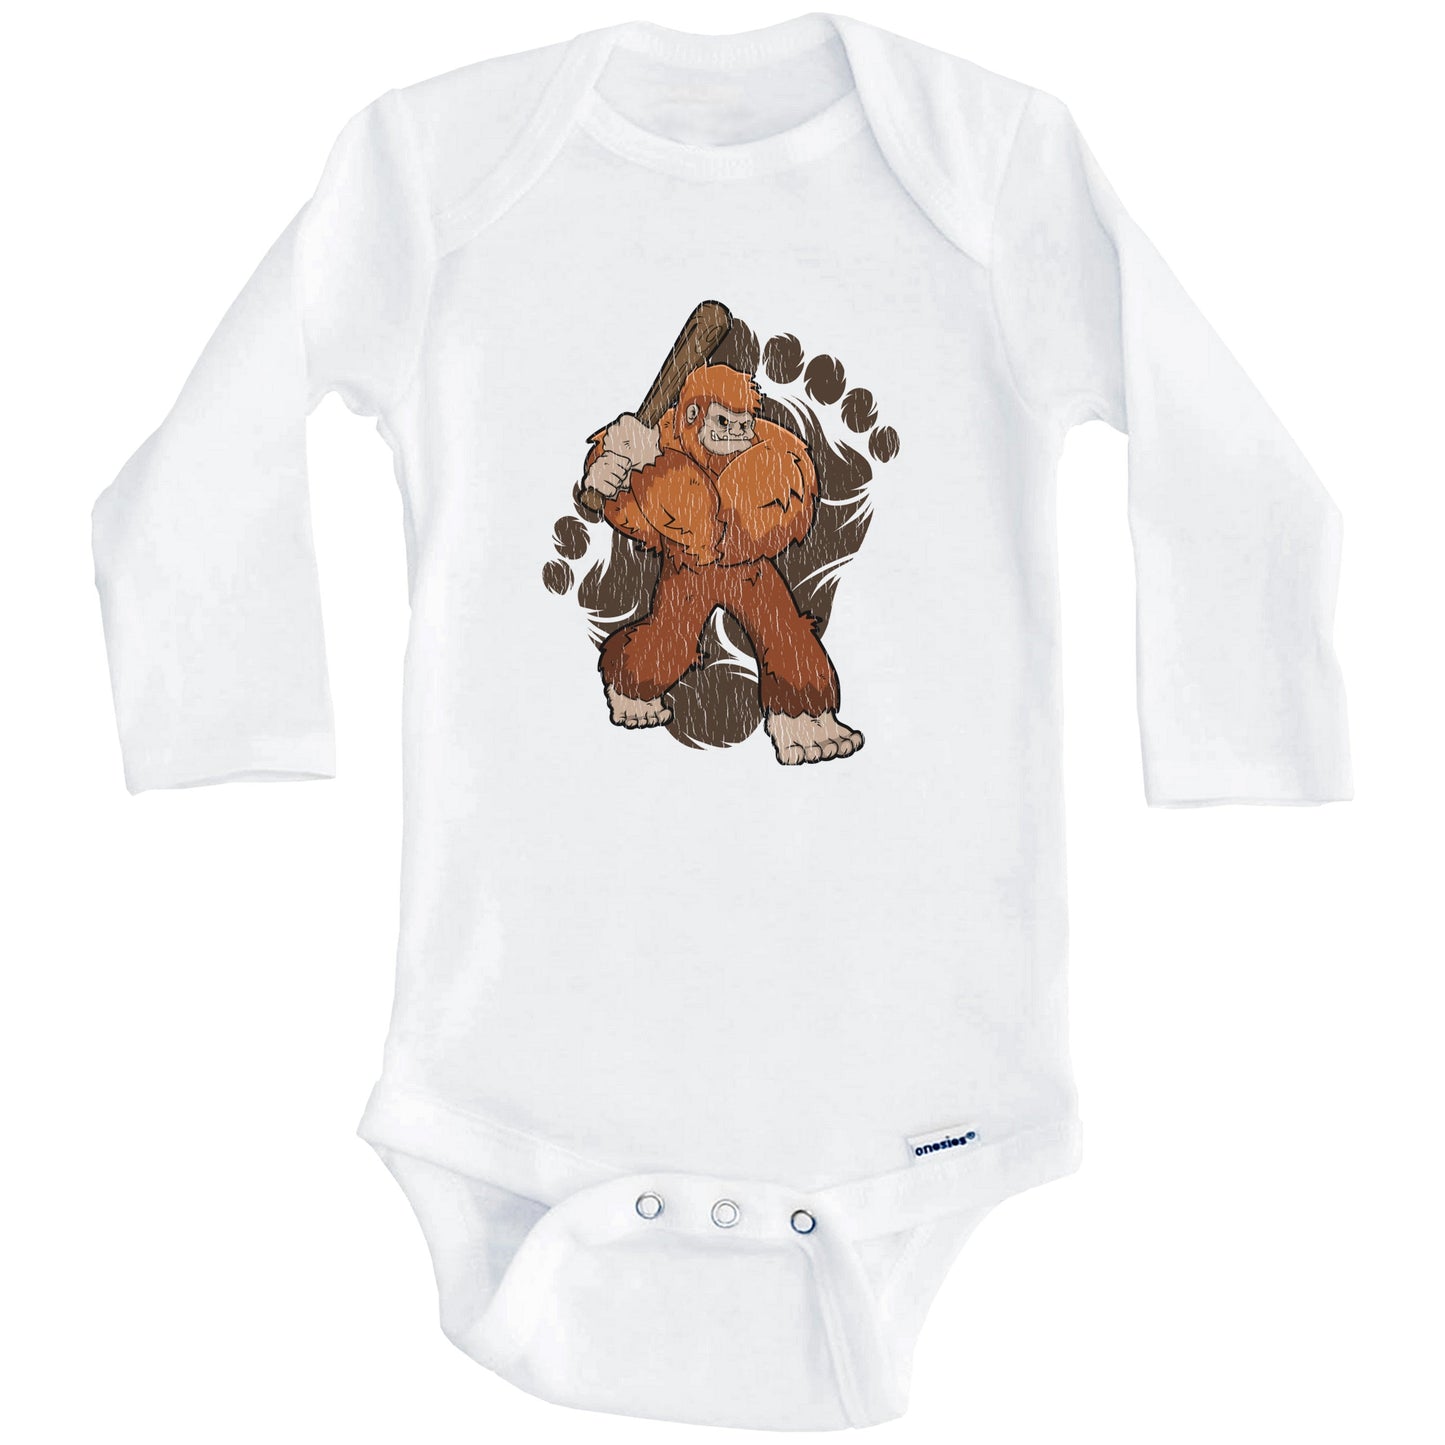 Bigfoot Baseball Baby Bodysuit - Sasquatch Baseball Bat One Piece Baby Bodysuit (Long Sleeves)